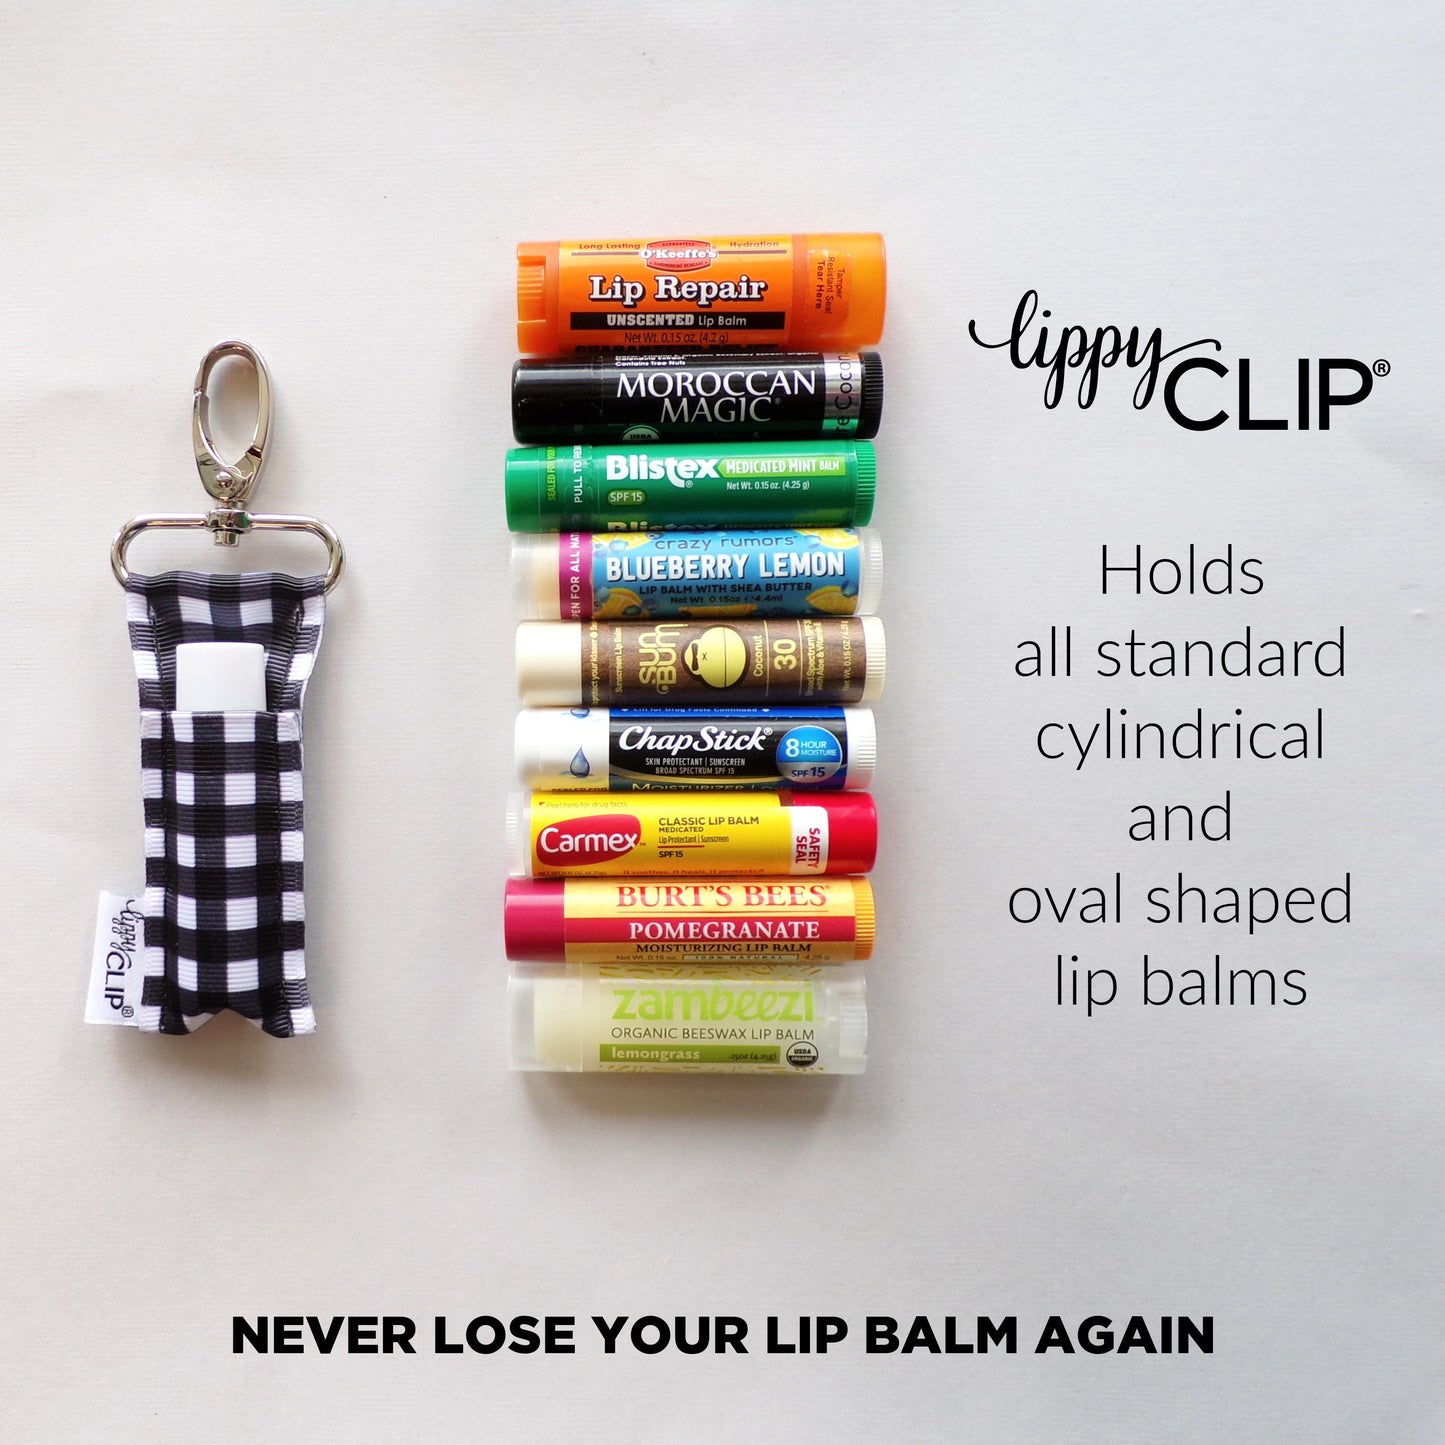 Citrus Love LippyClip® Lip Balm Holder